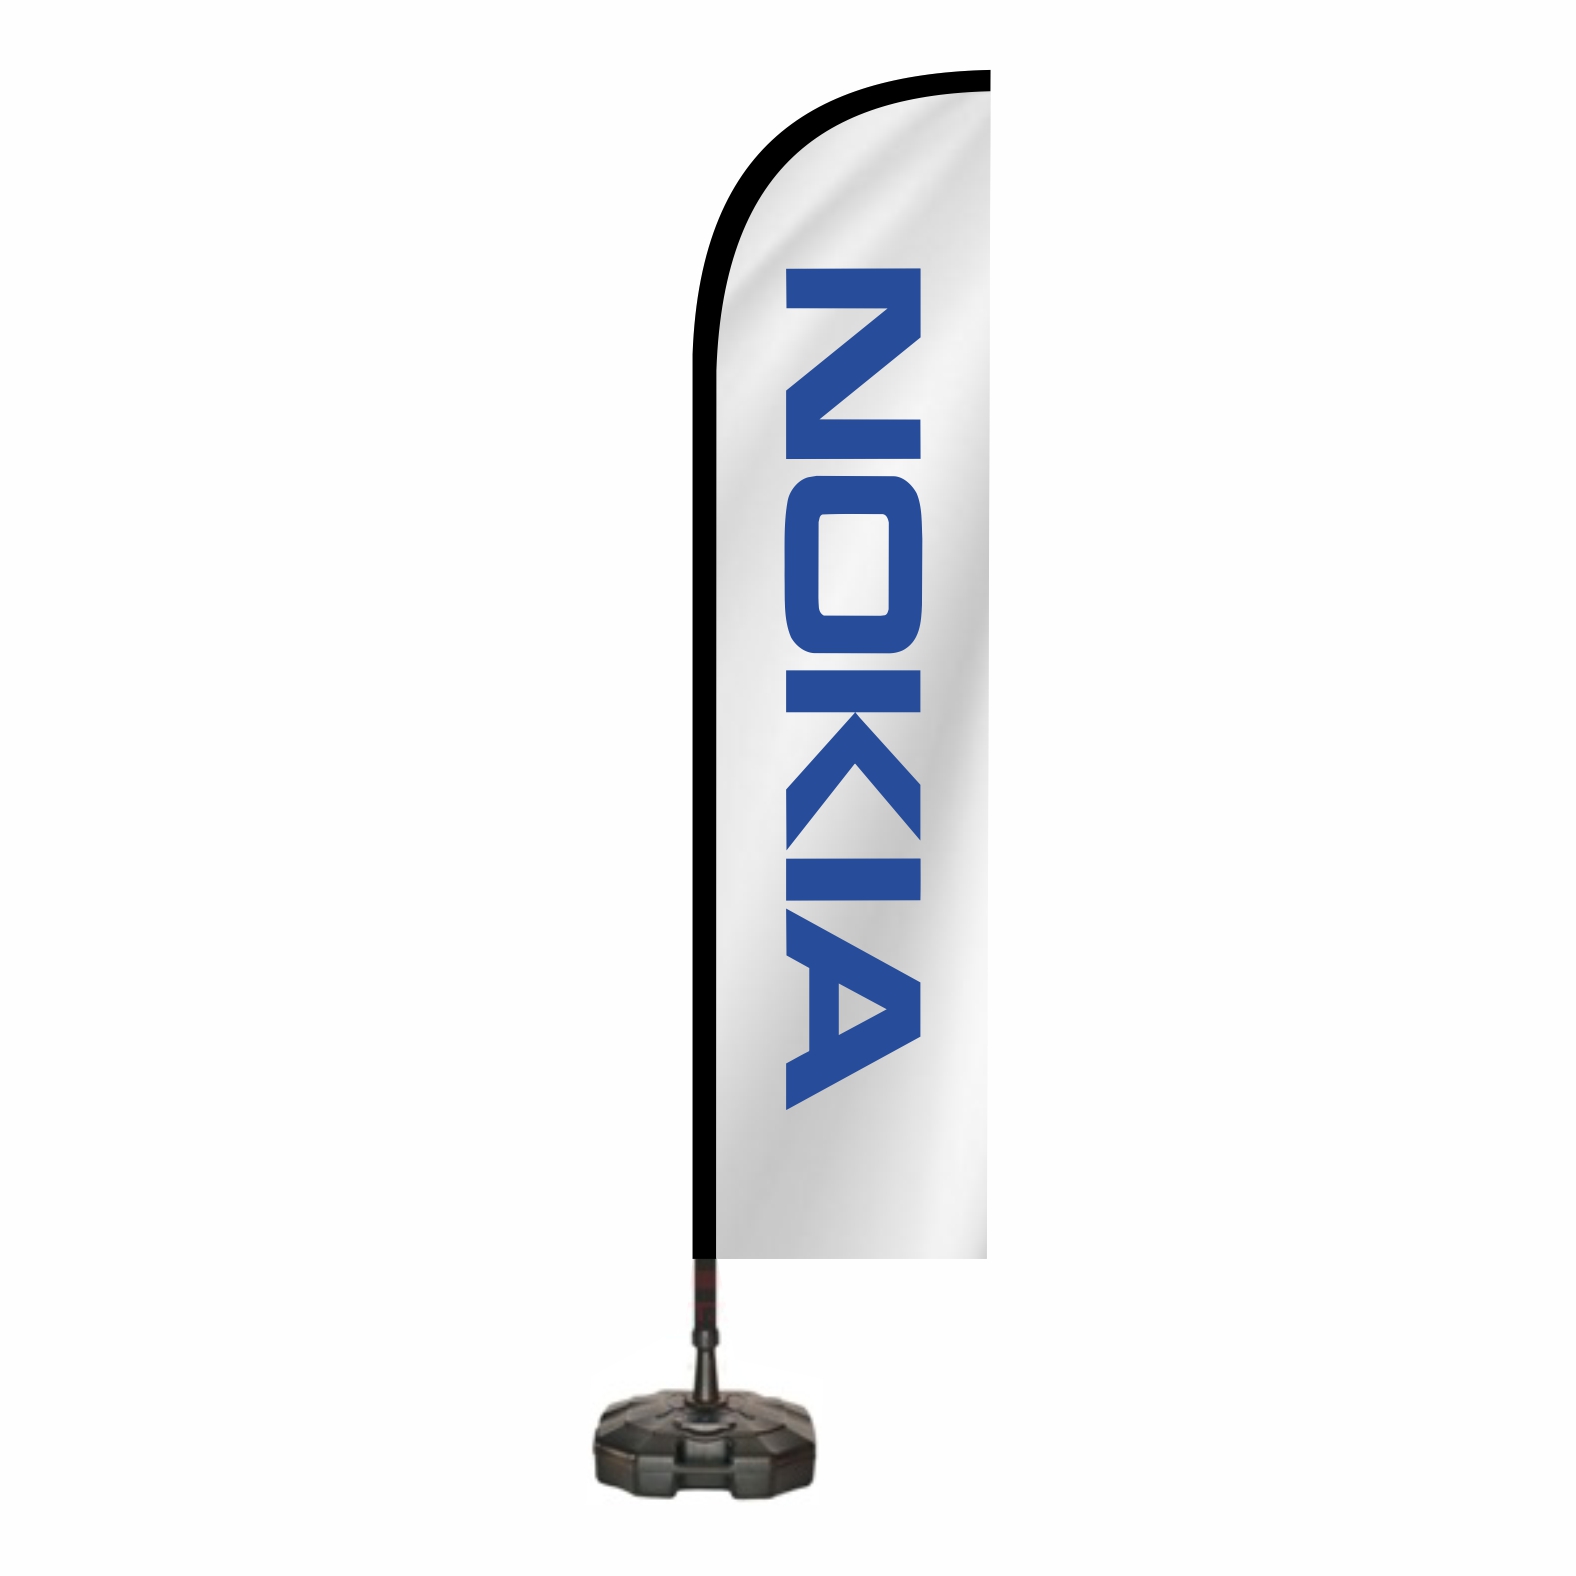 Nokia Oltal Bayra retimi ve Sat